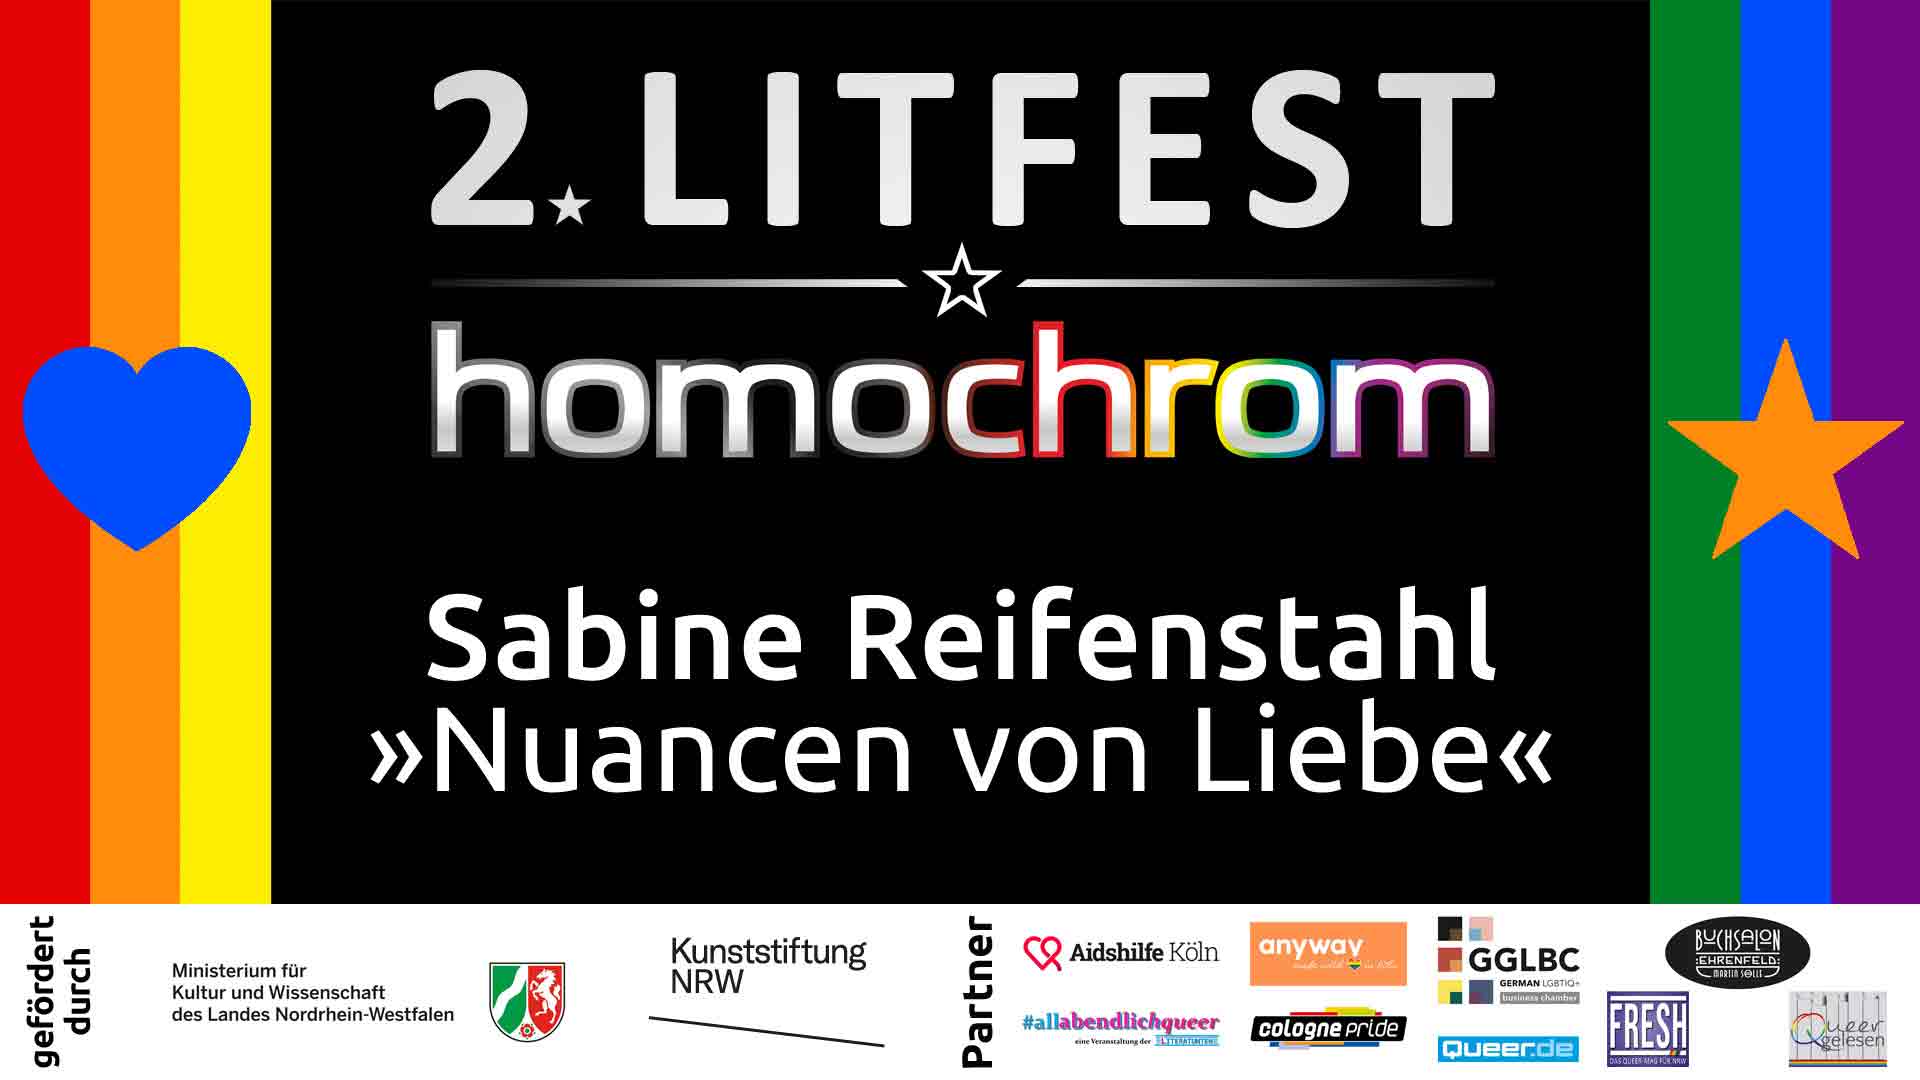 Youtube Video, Sabine Reifenstahl, 2. Litfest homochrom